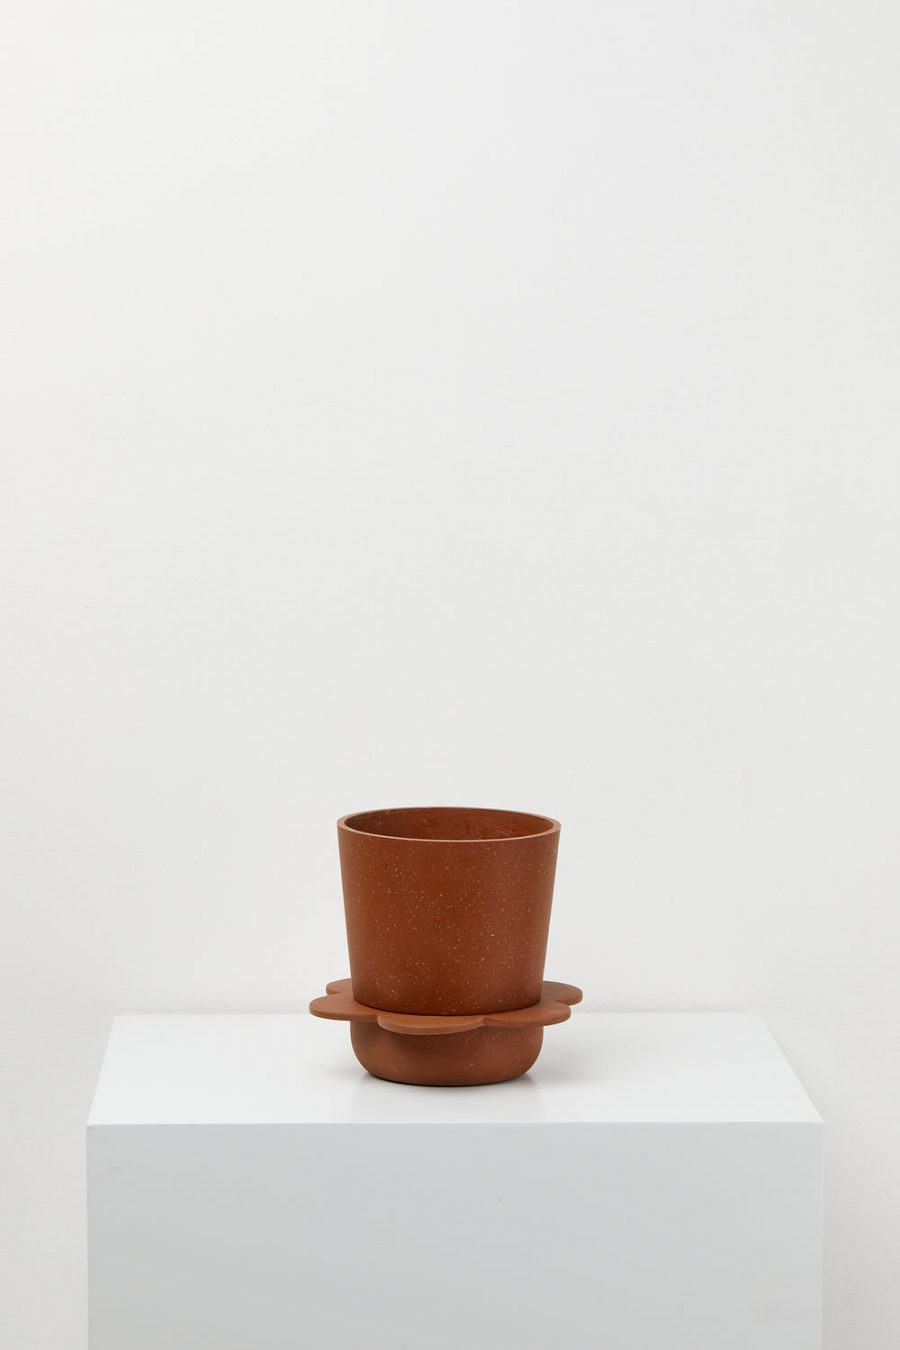 capra designs spring indoor pot clay with musk speckle